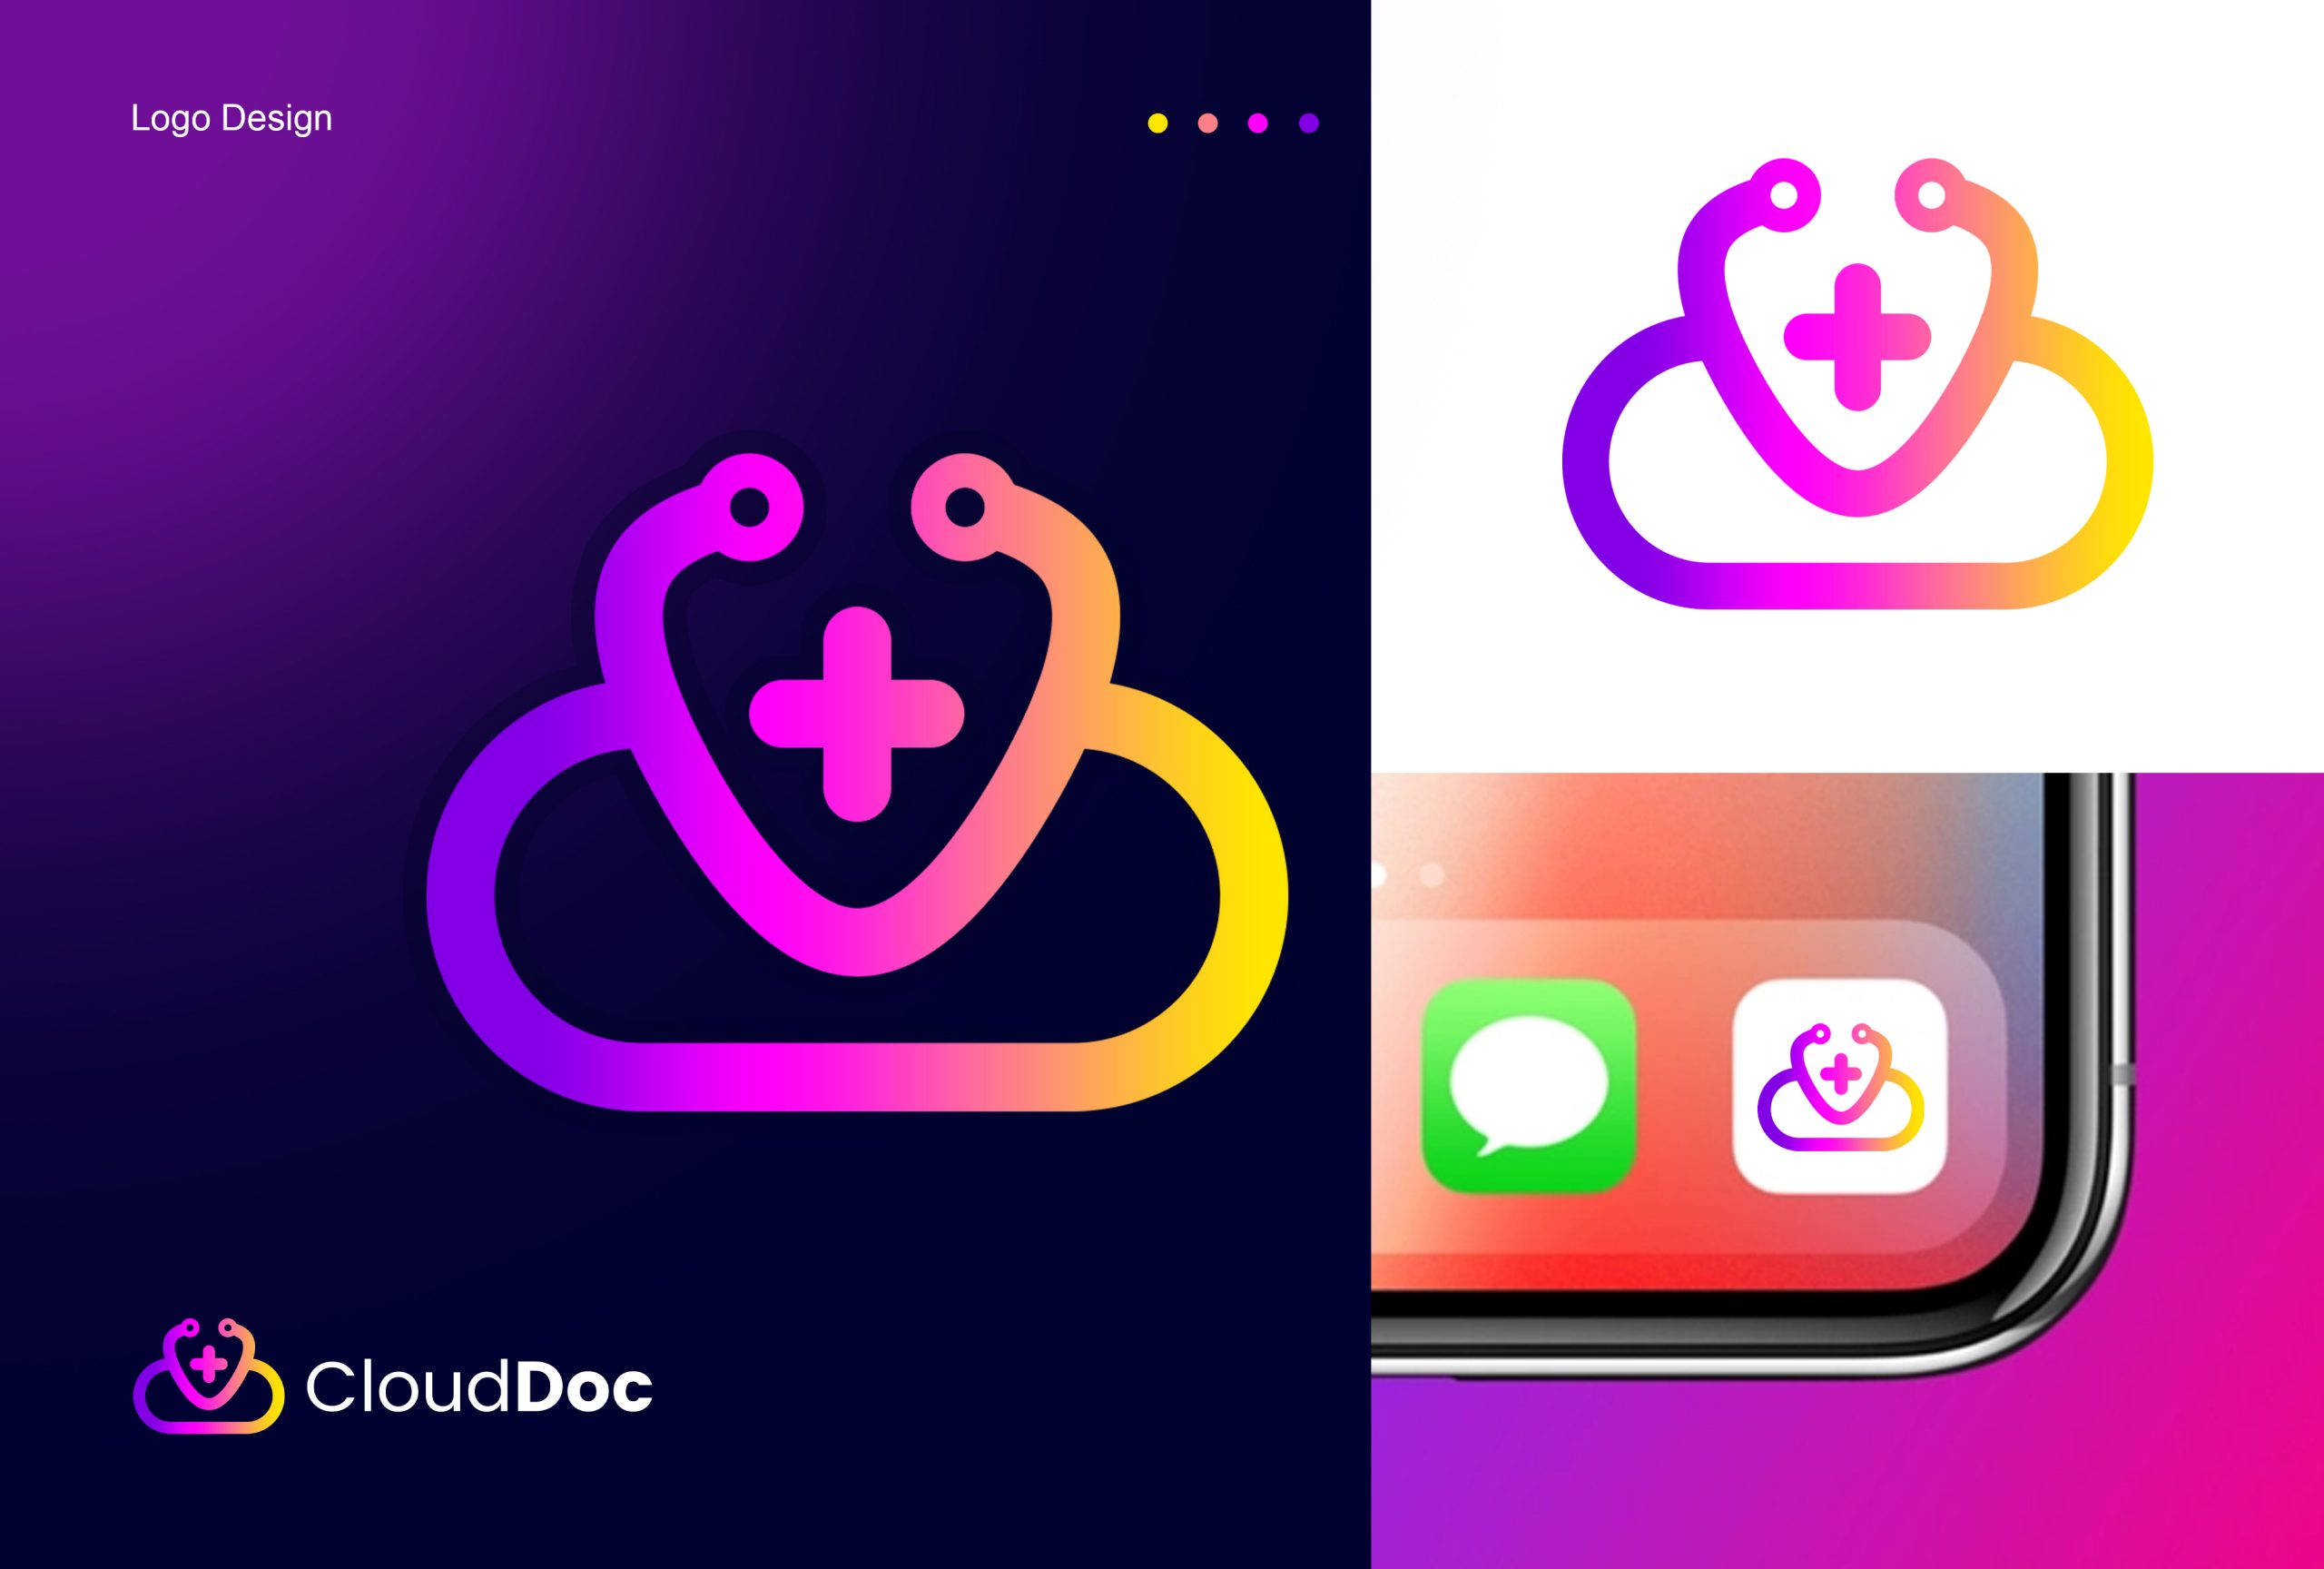 CloudDoc Logo Design Free Download